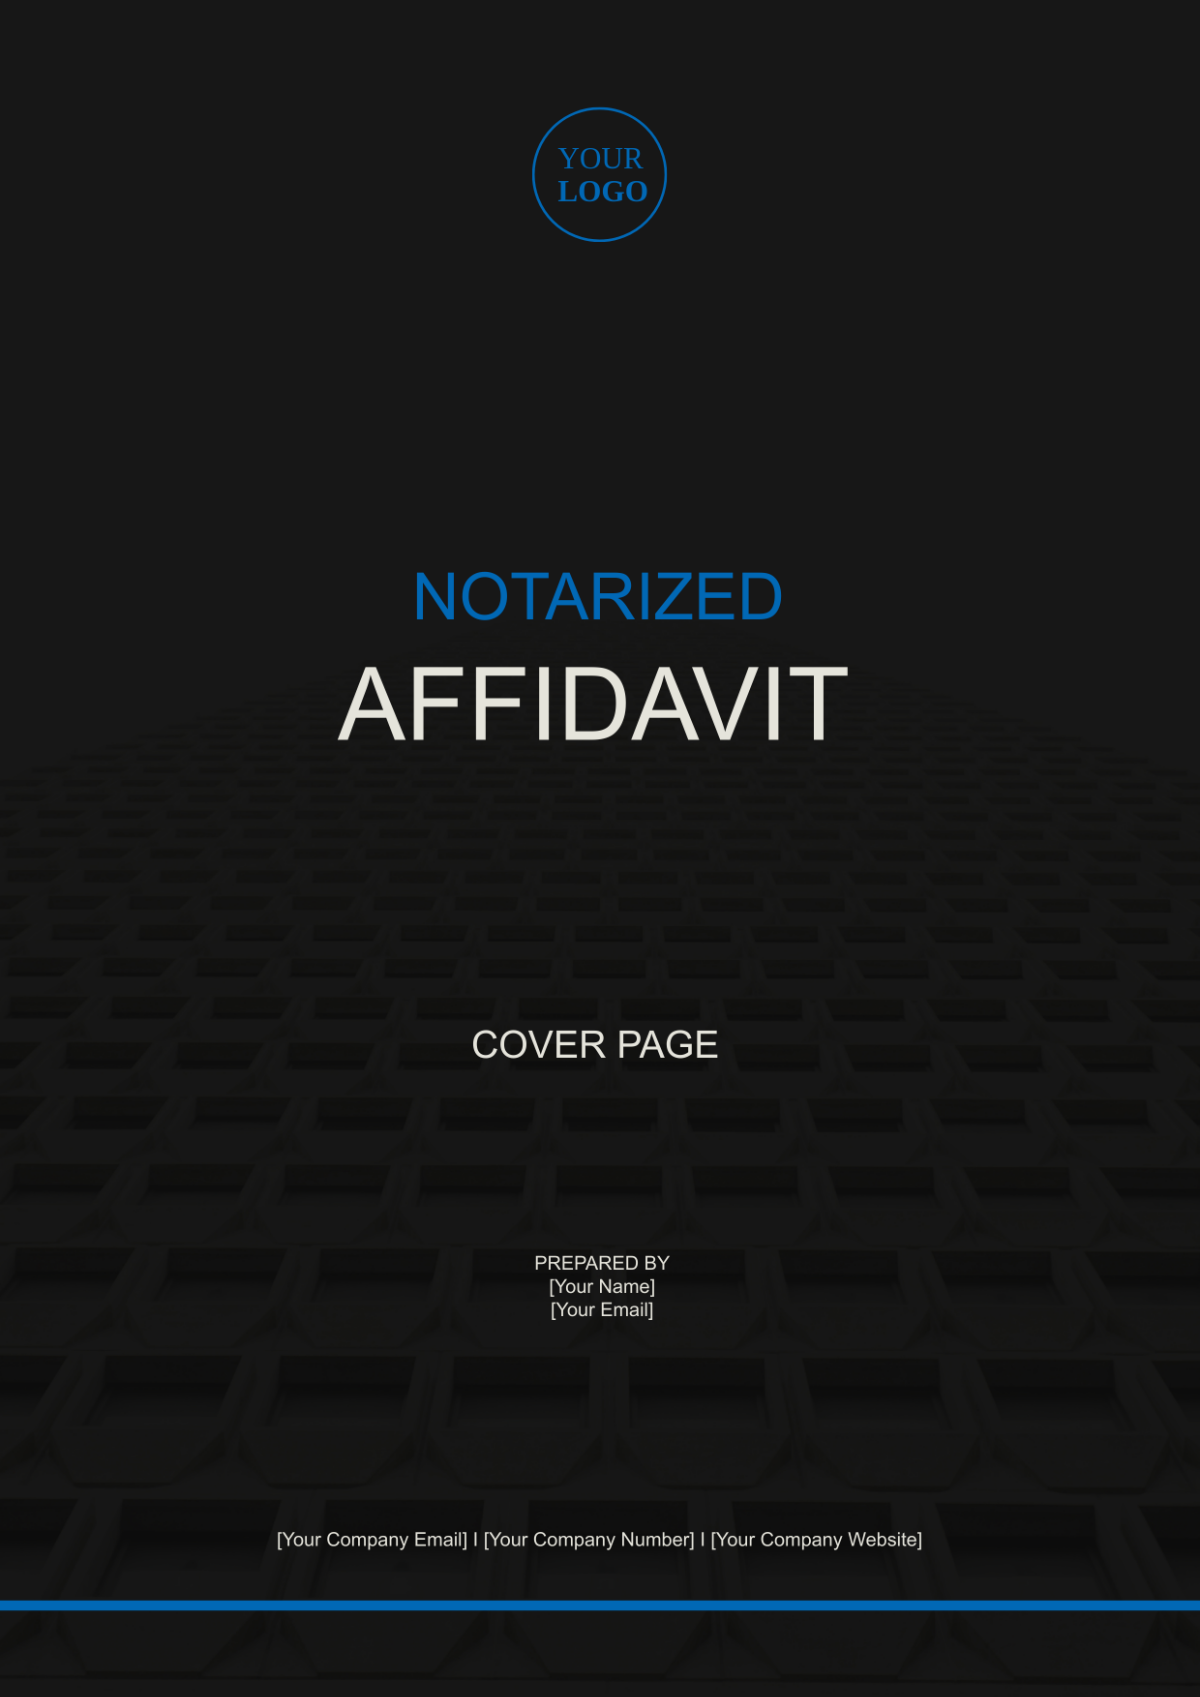 Notarized Affidavit Cover Page